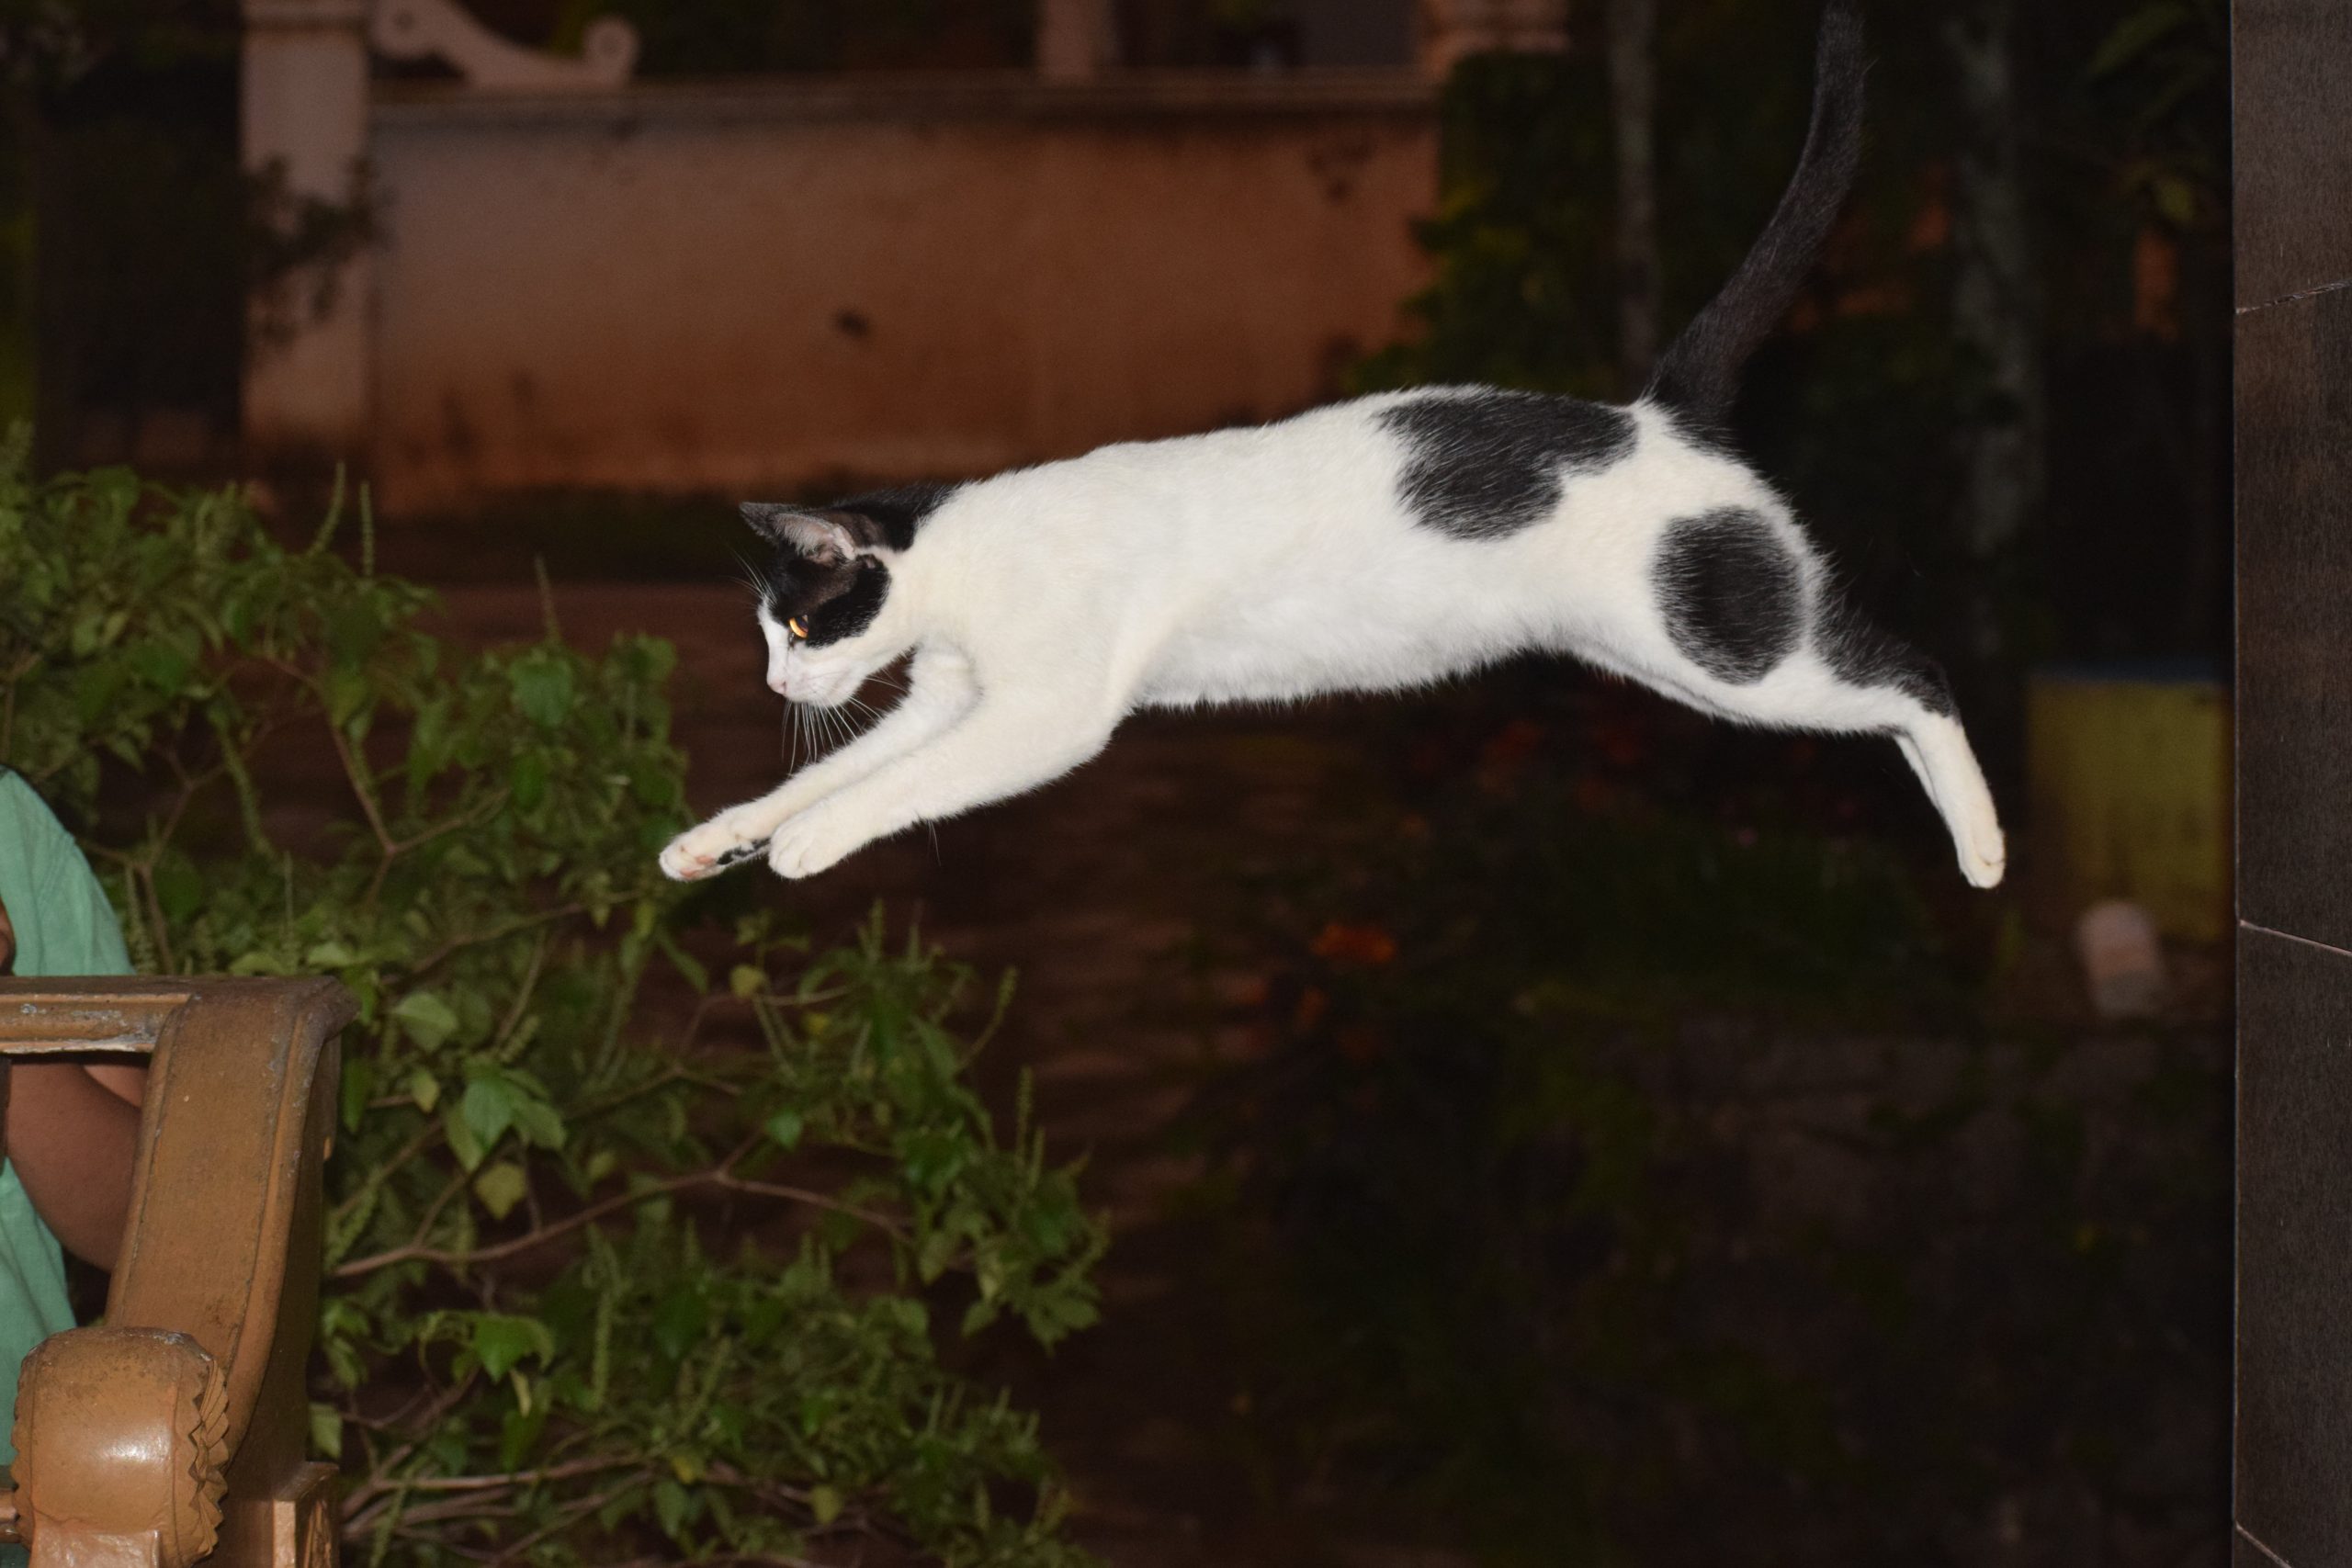 A cat jumping across